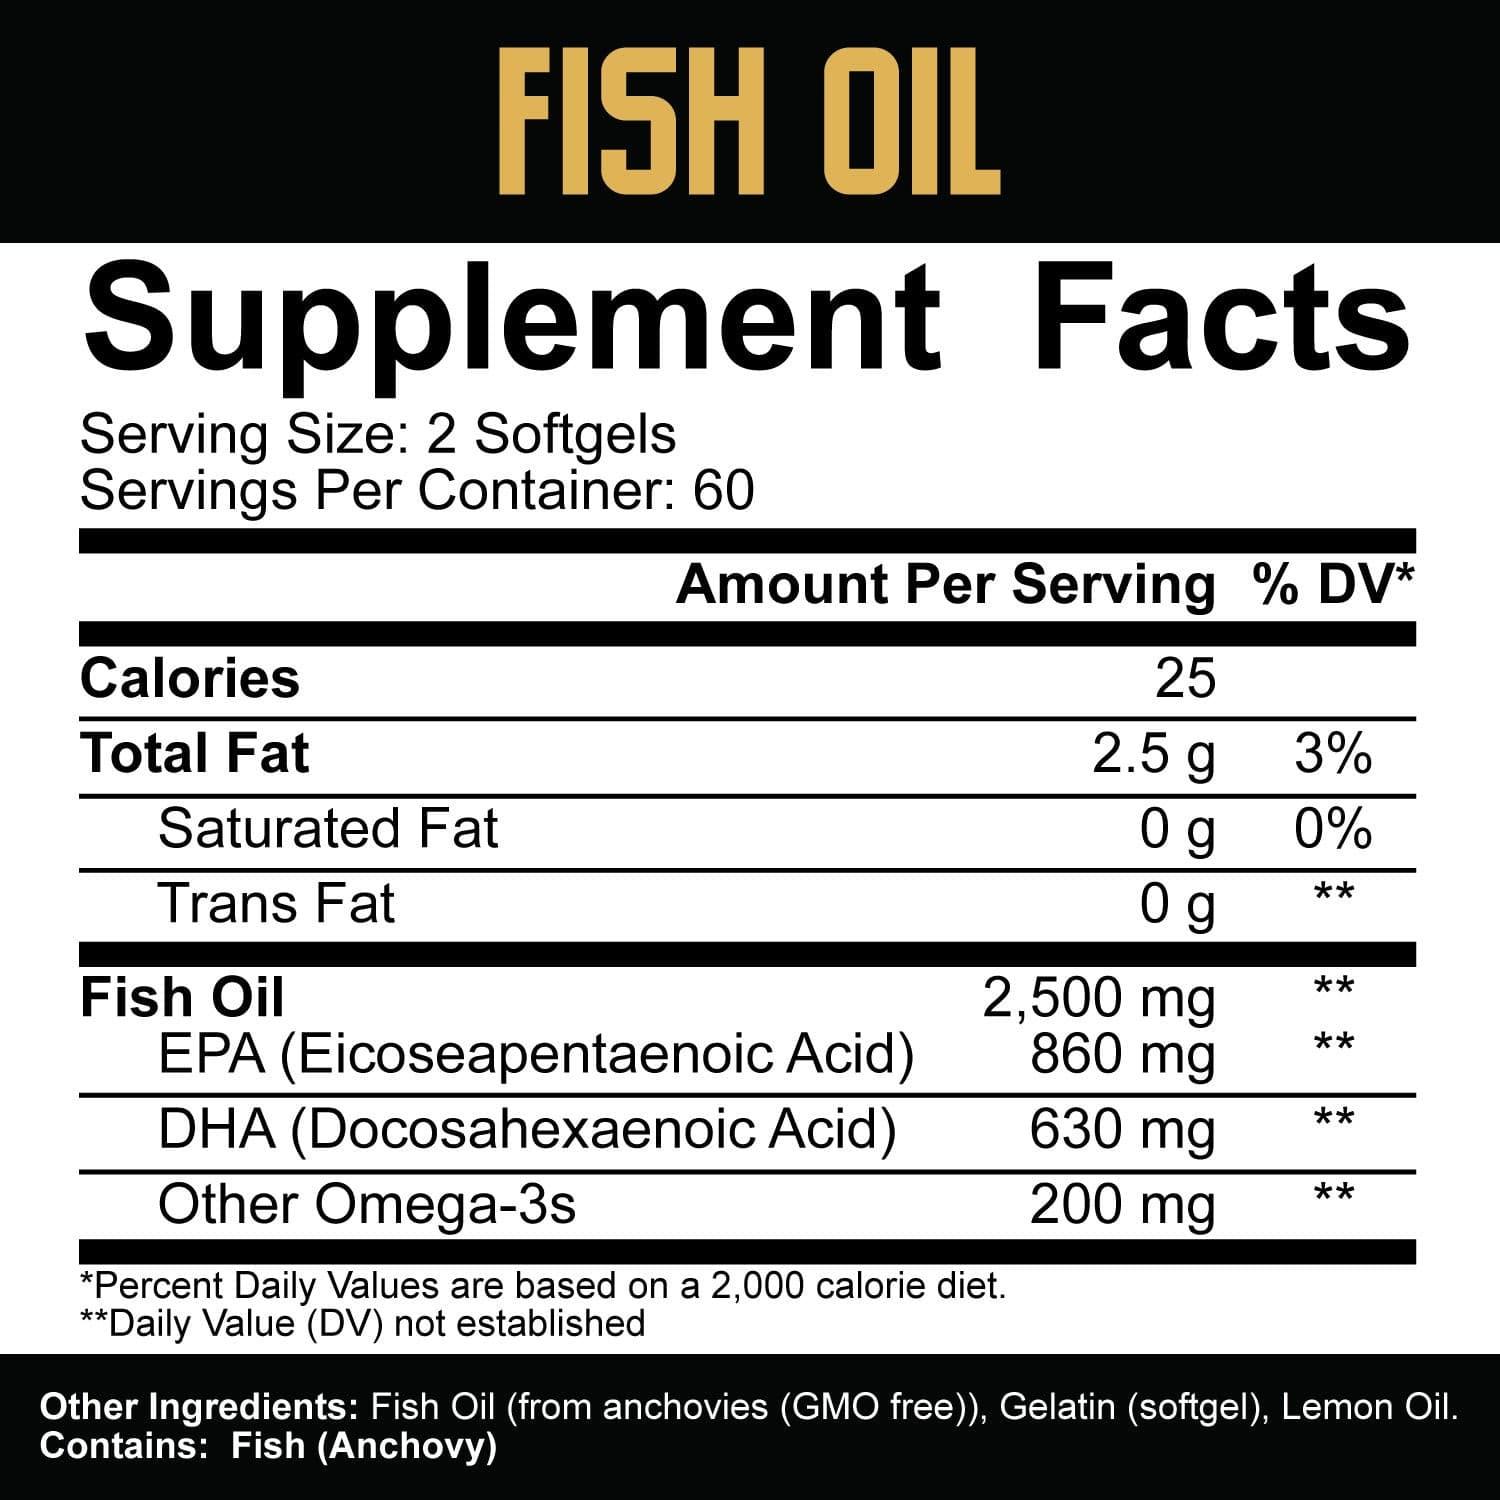 Fish Oil - 5% Nutrition